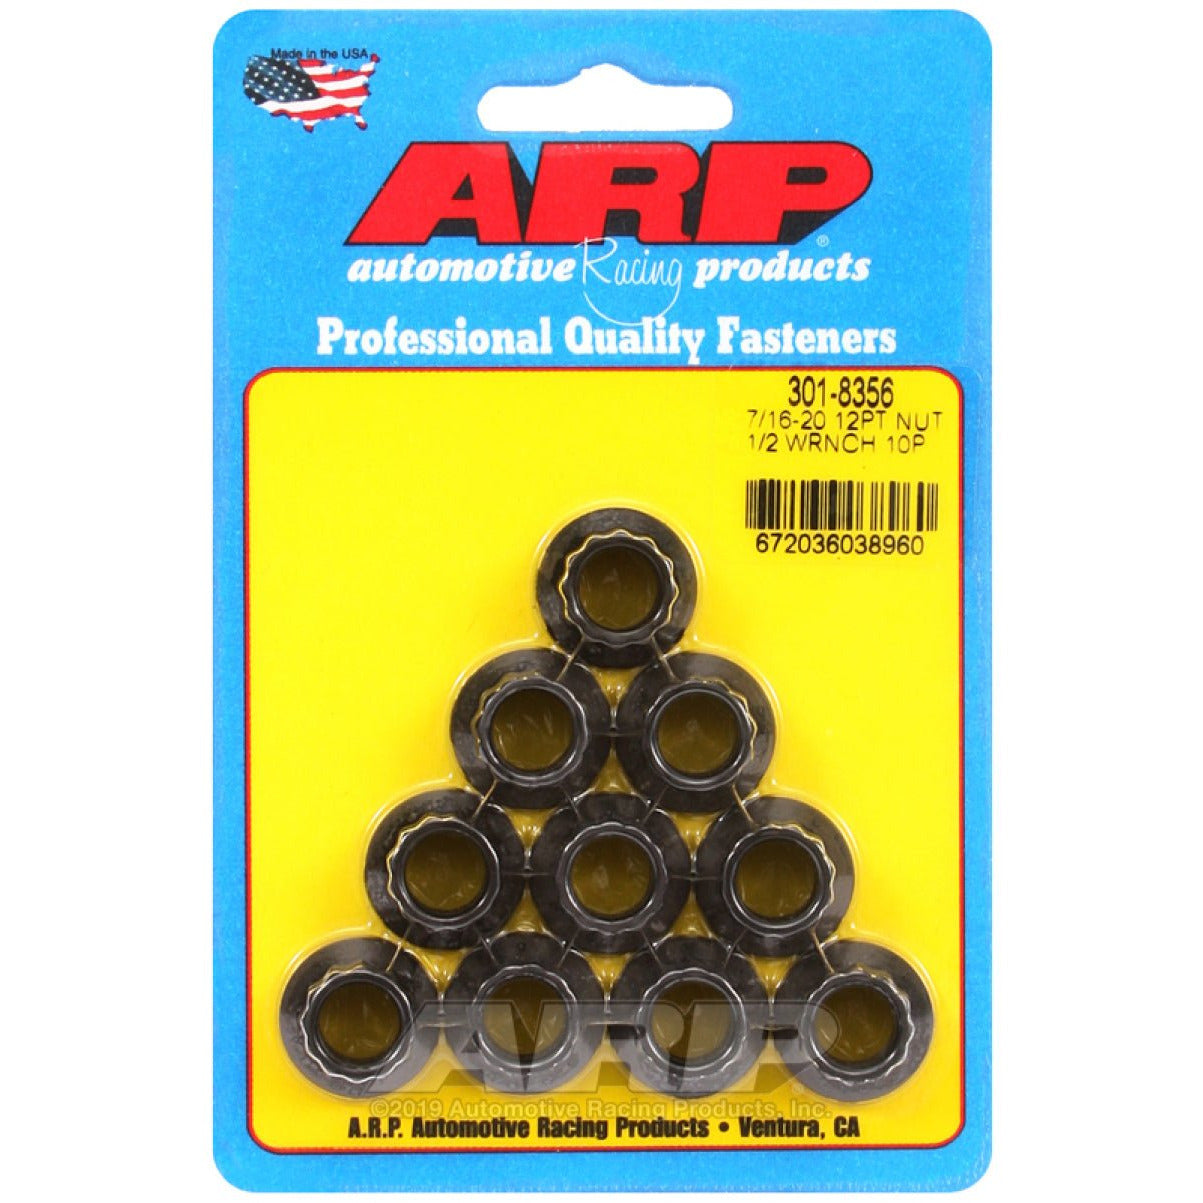 ARP 7/16-20 1/2 Socket 12 Pt Nut Kit (Pack of 10) ARP Hardware Kits - Other